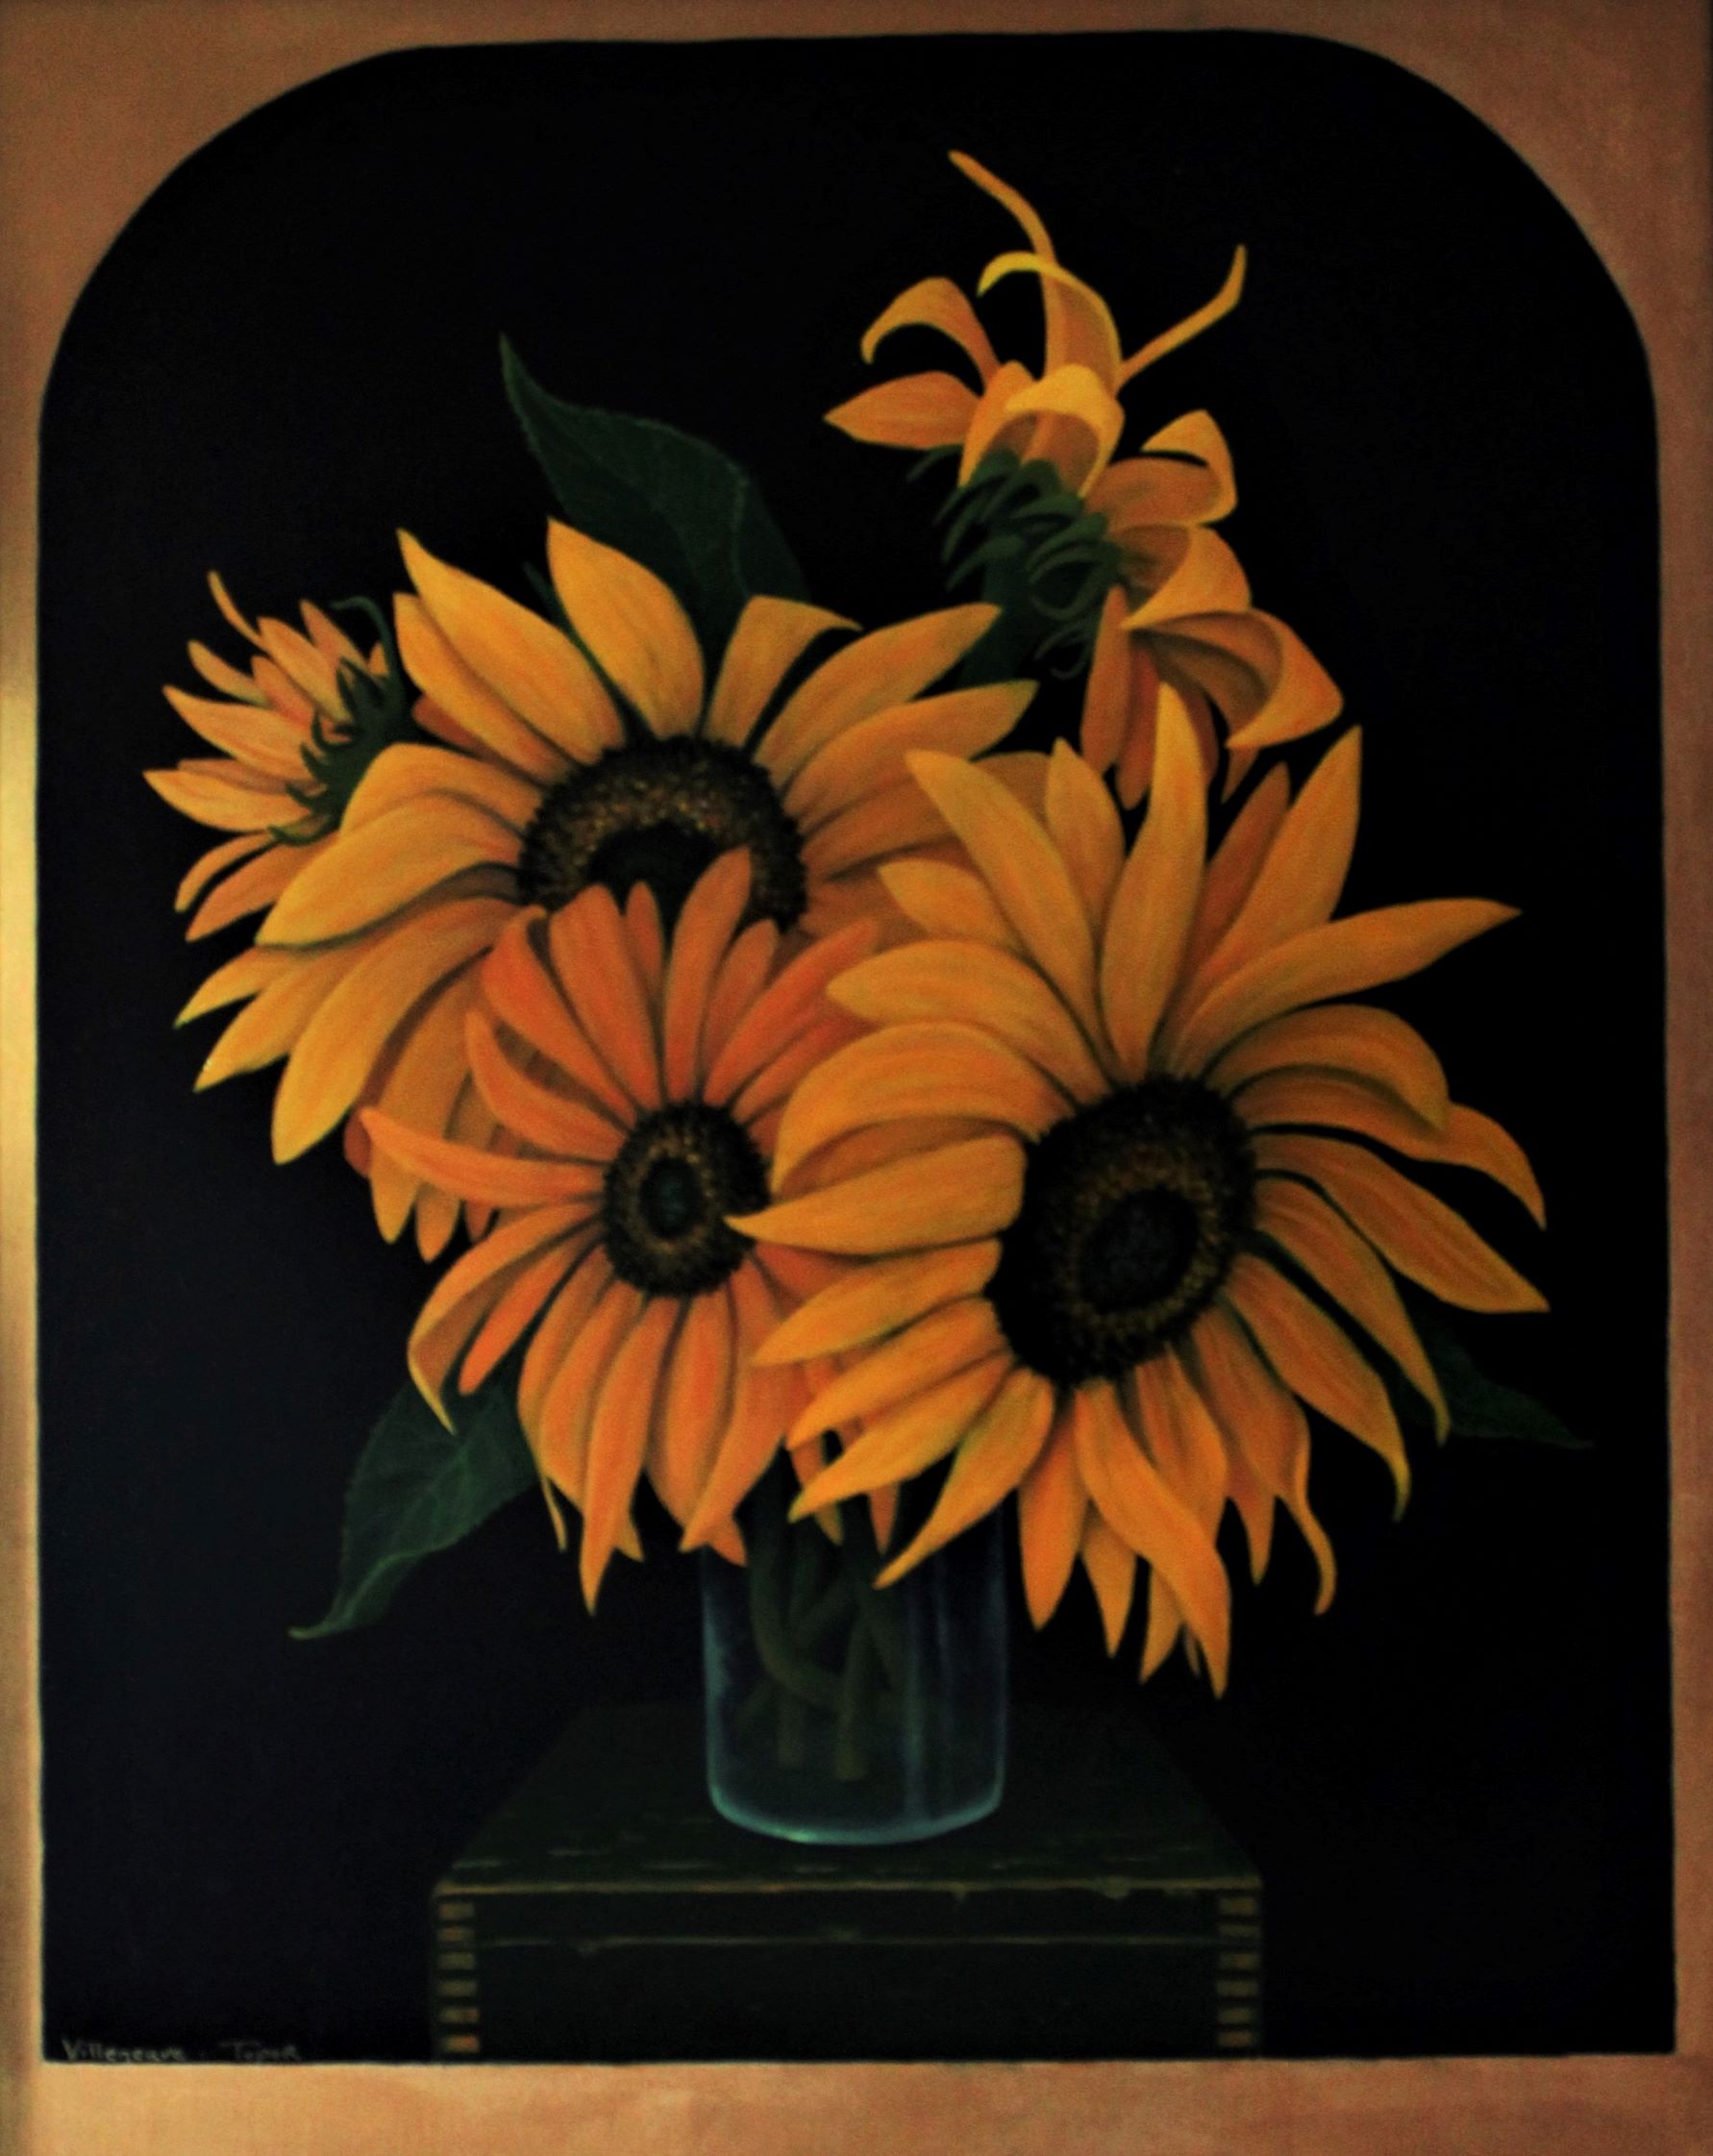 Glorious Sunflowers, by Kristine Villeneuve-Topor